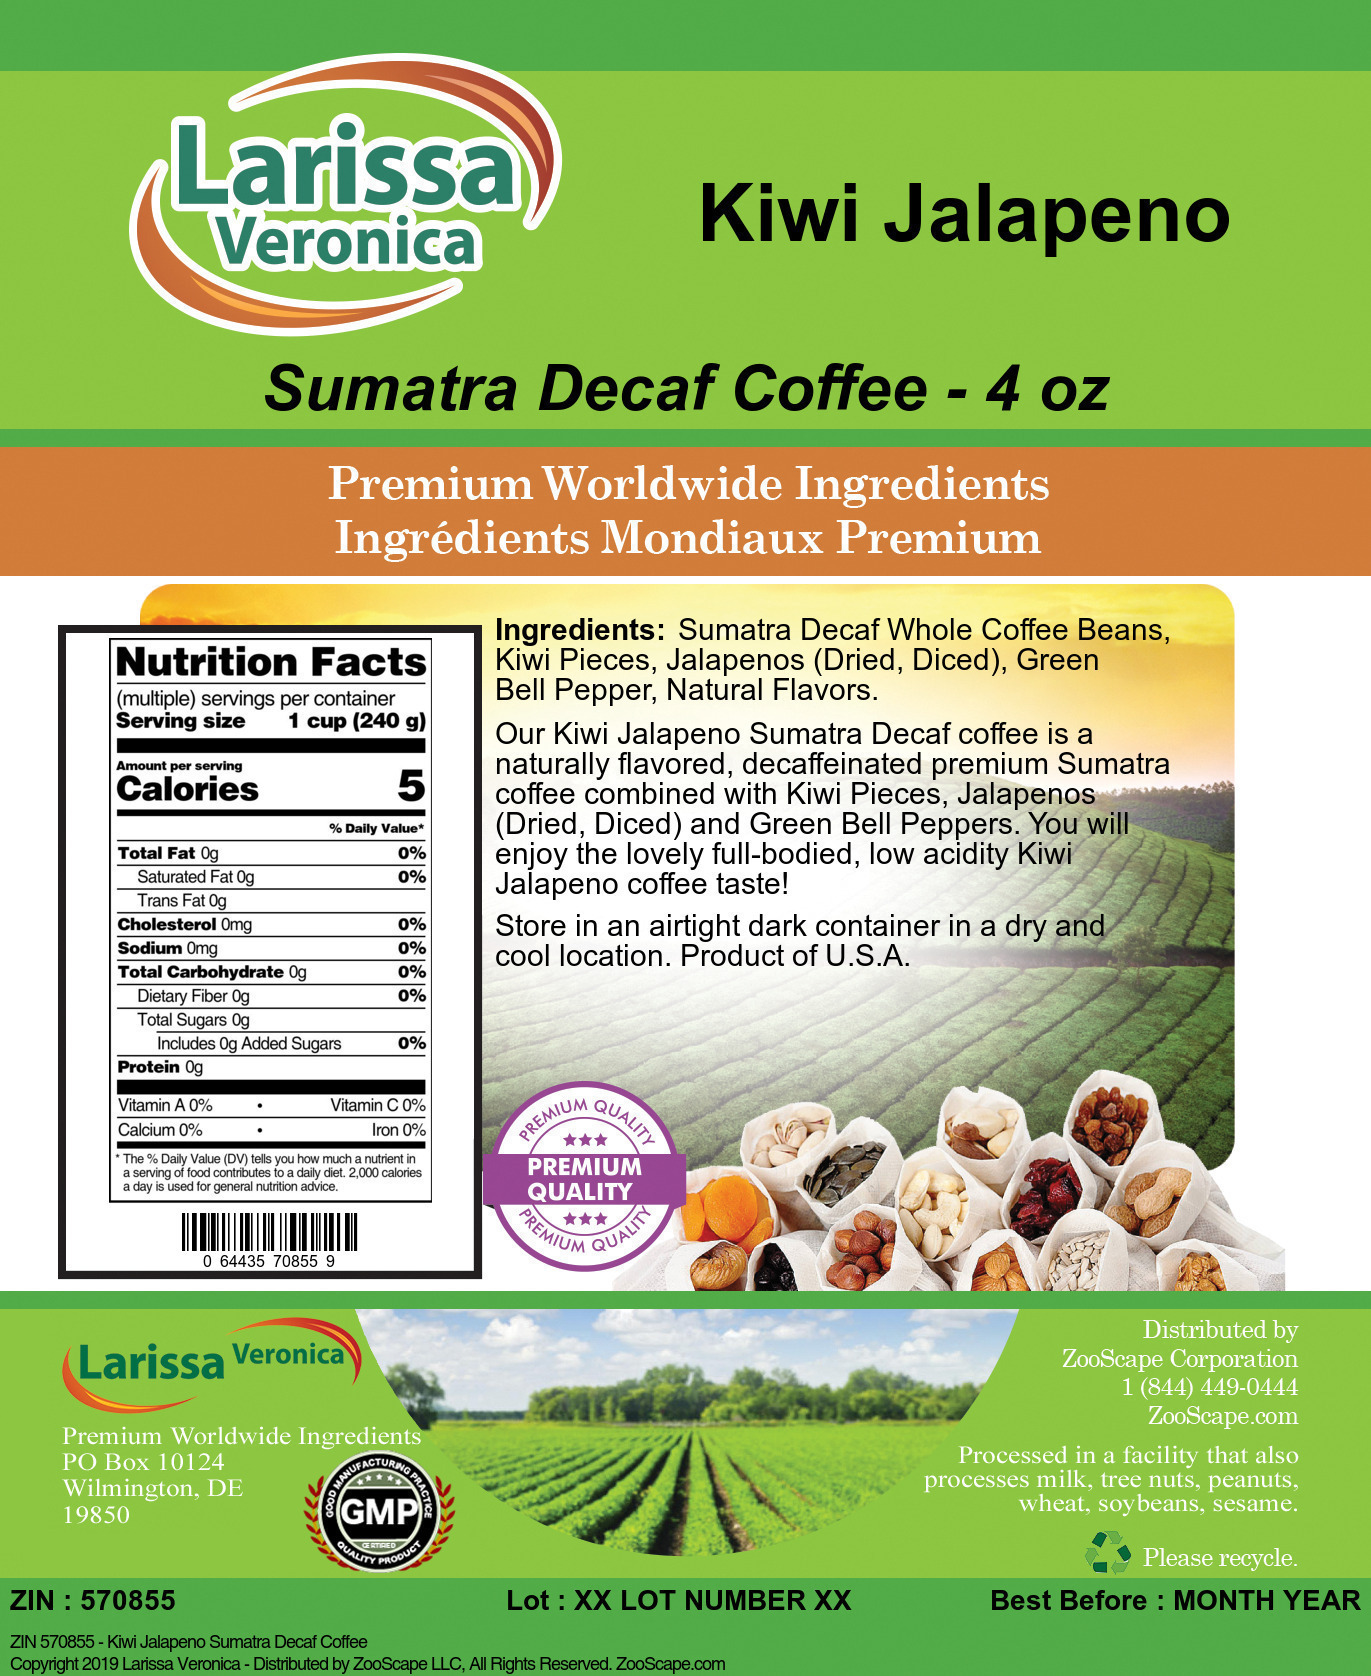 Kiwi Jalapeno Sumatra Decaf Coffee - Label